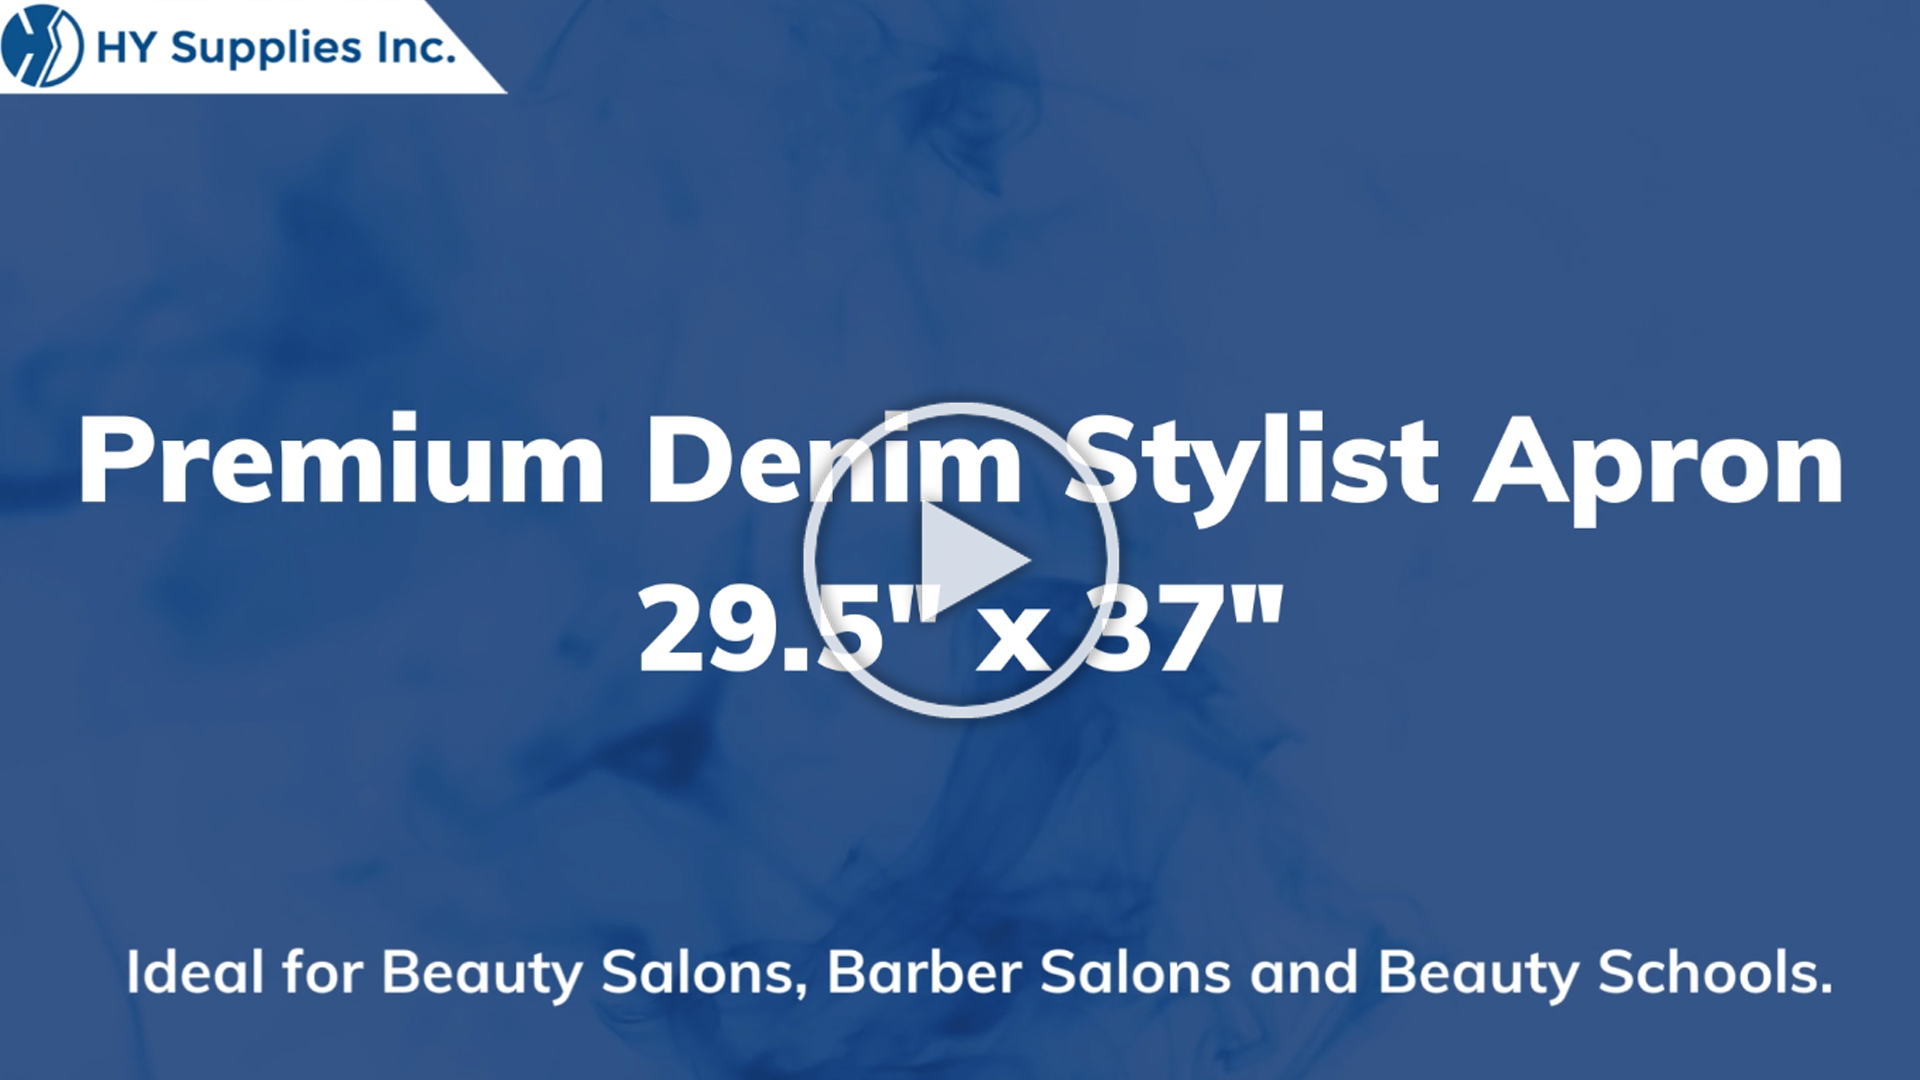 	Premium Denim Stylist Apron - 29.5 x 37